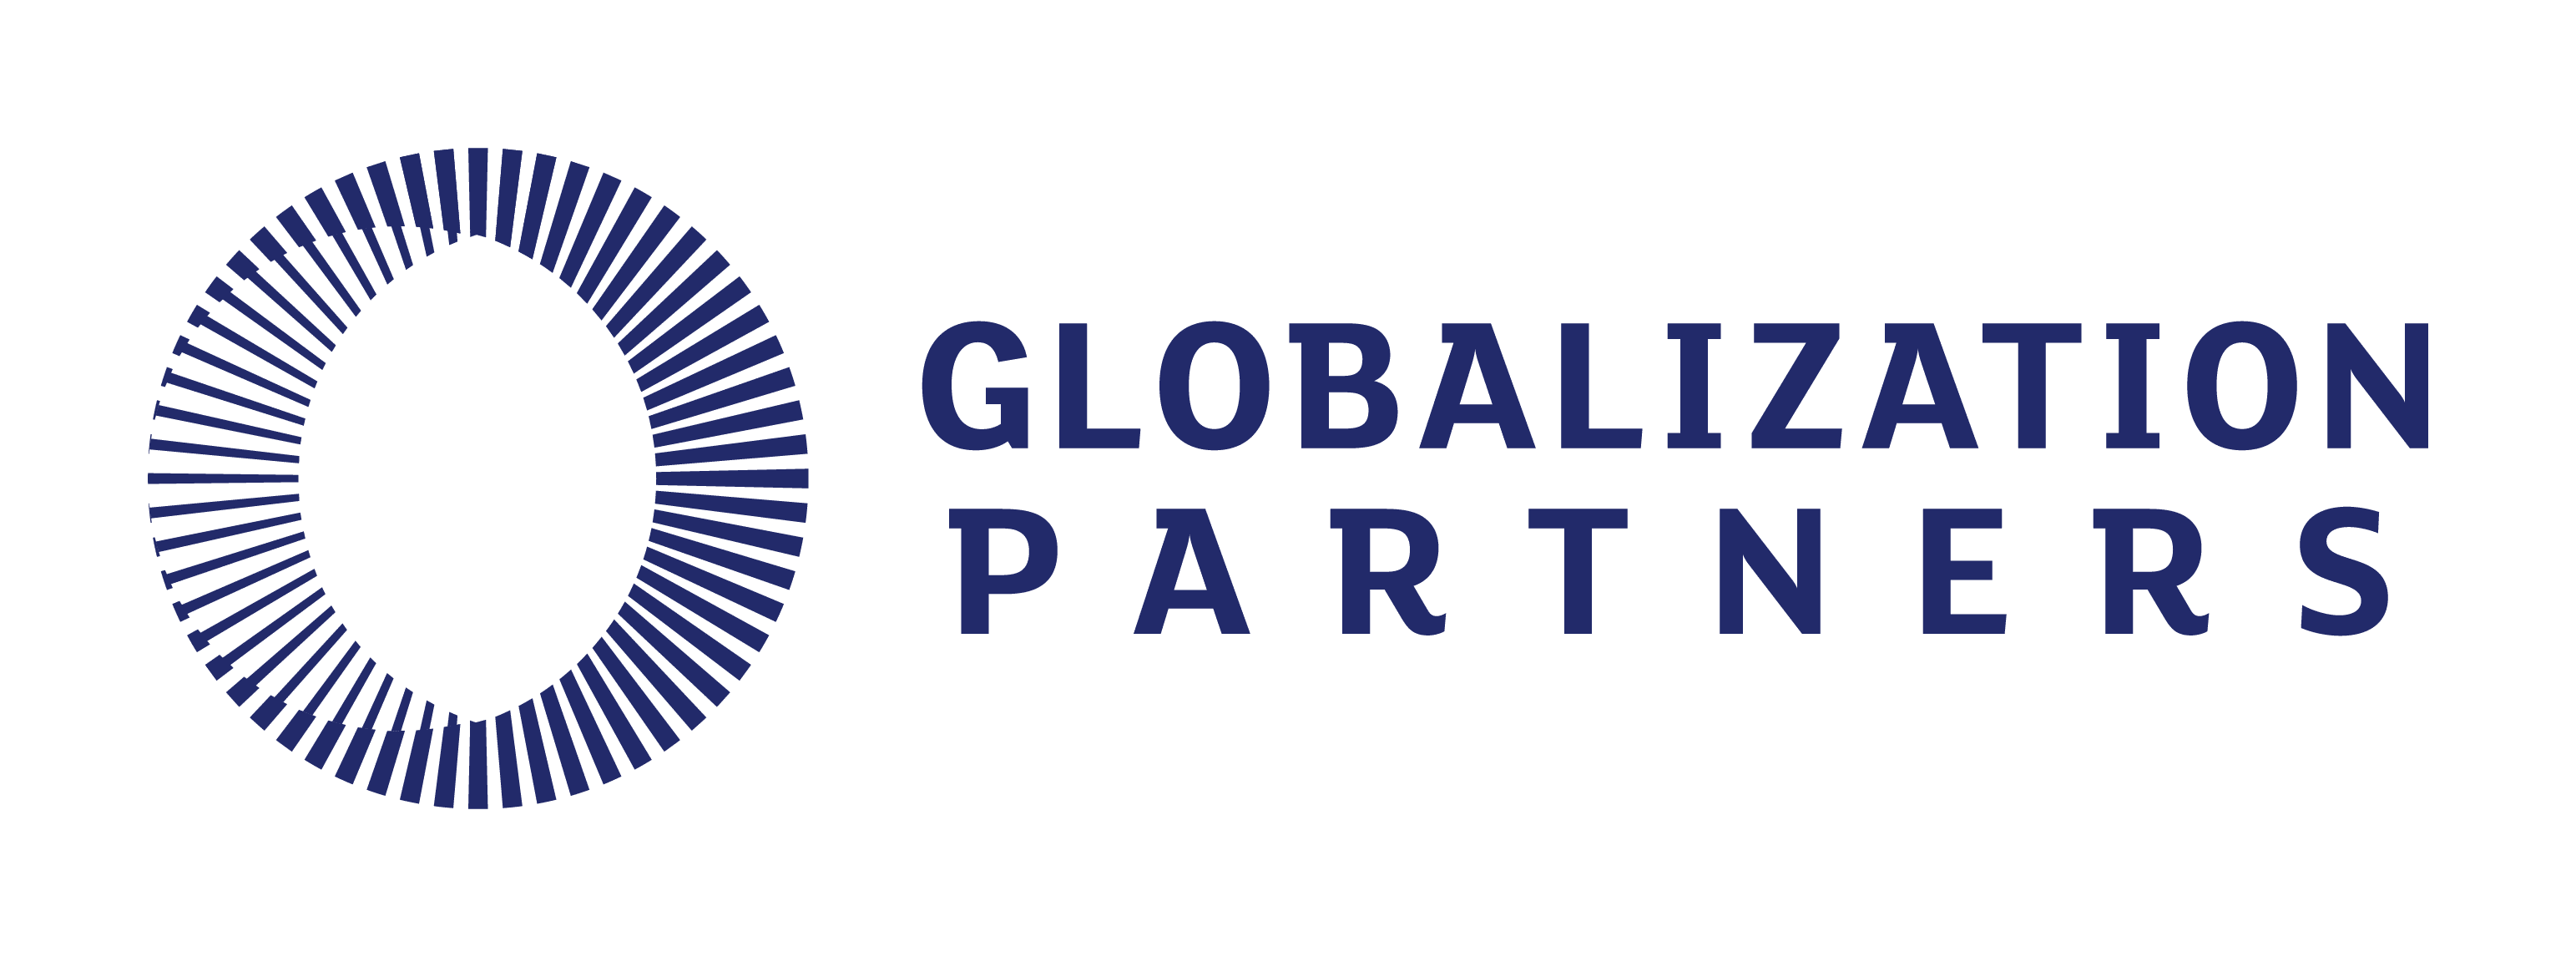 Globalization Partners Logo Horizontal One Color